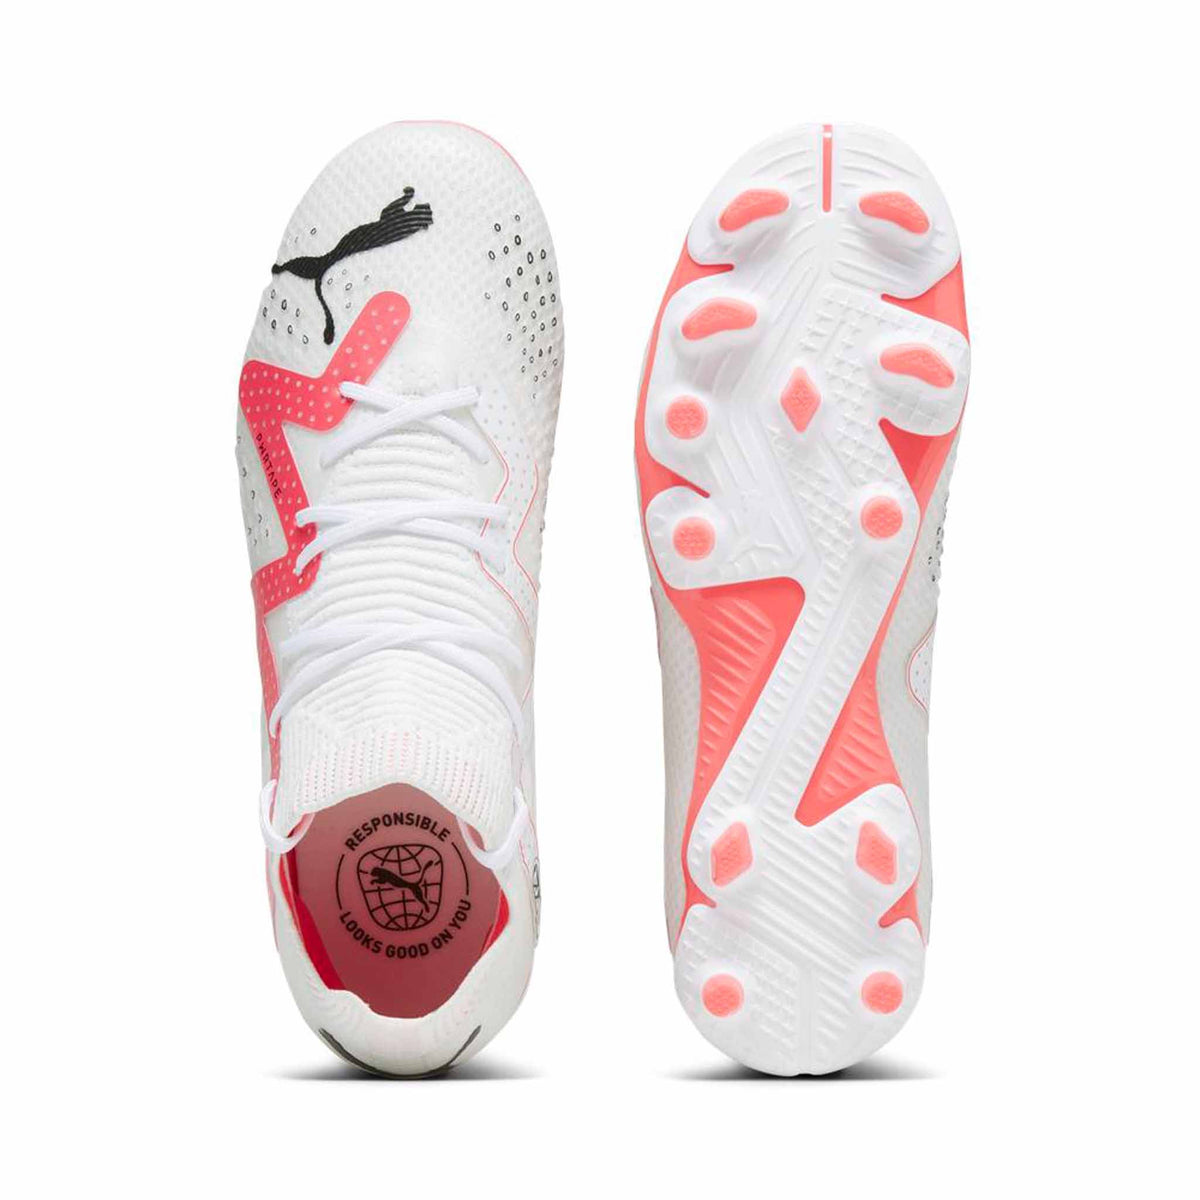 Puma Future Pro FG/AG chaussures de soccer à crampons junior - Puma White / Fire Orchid